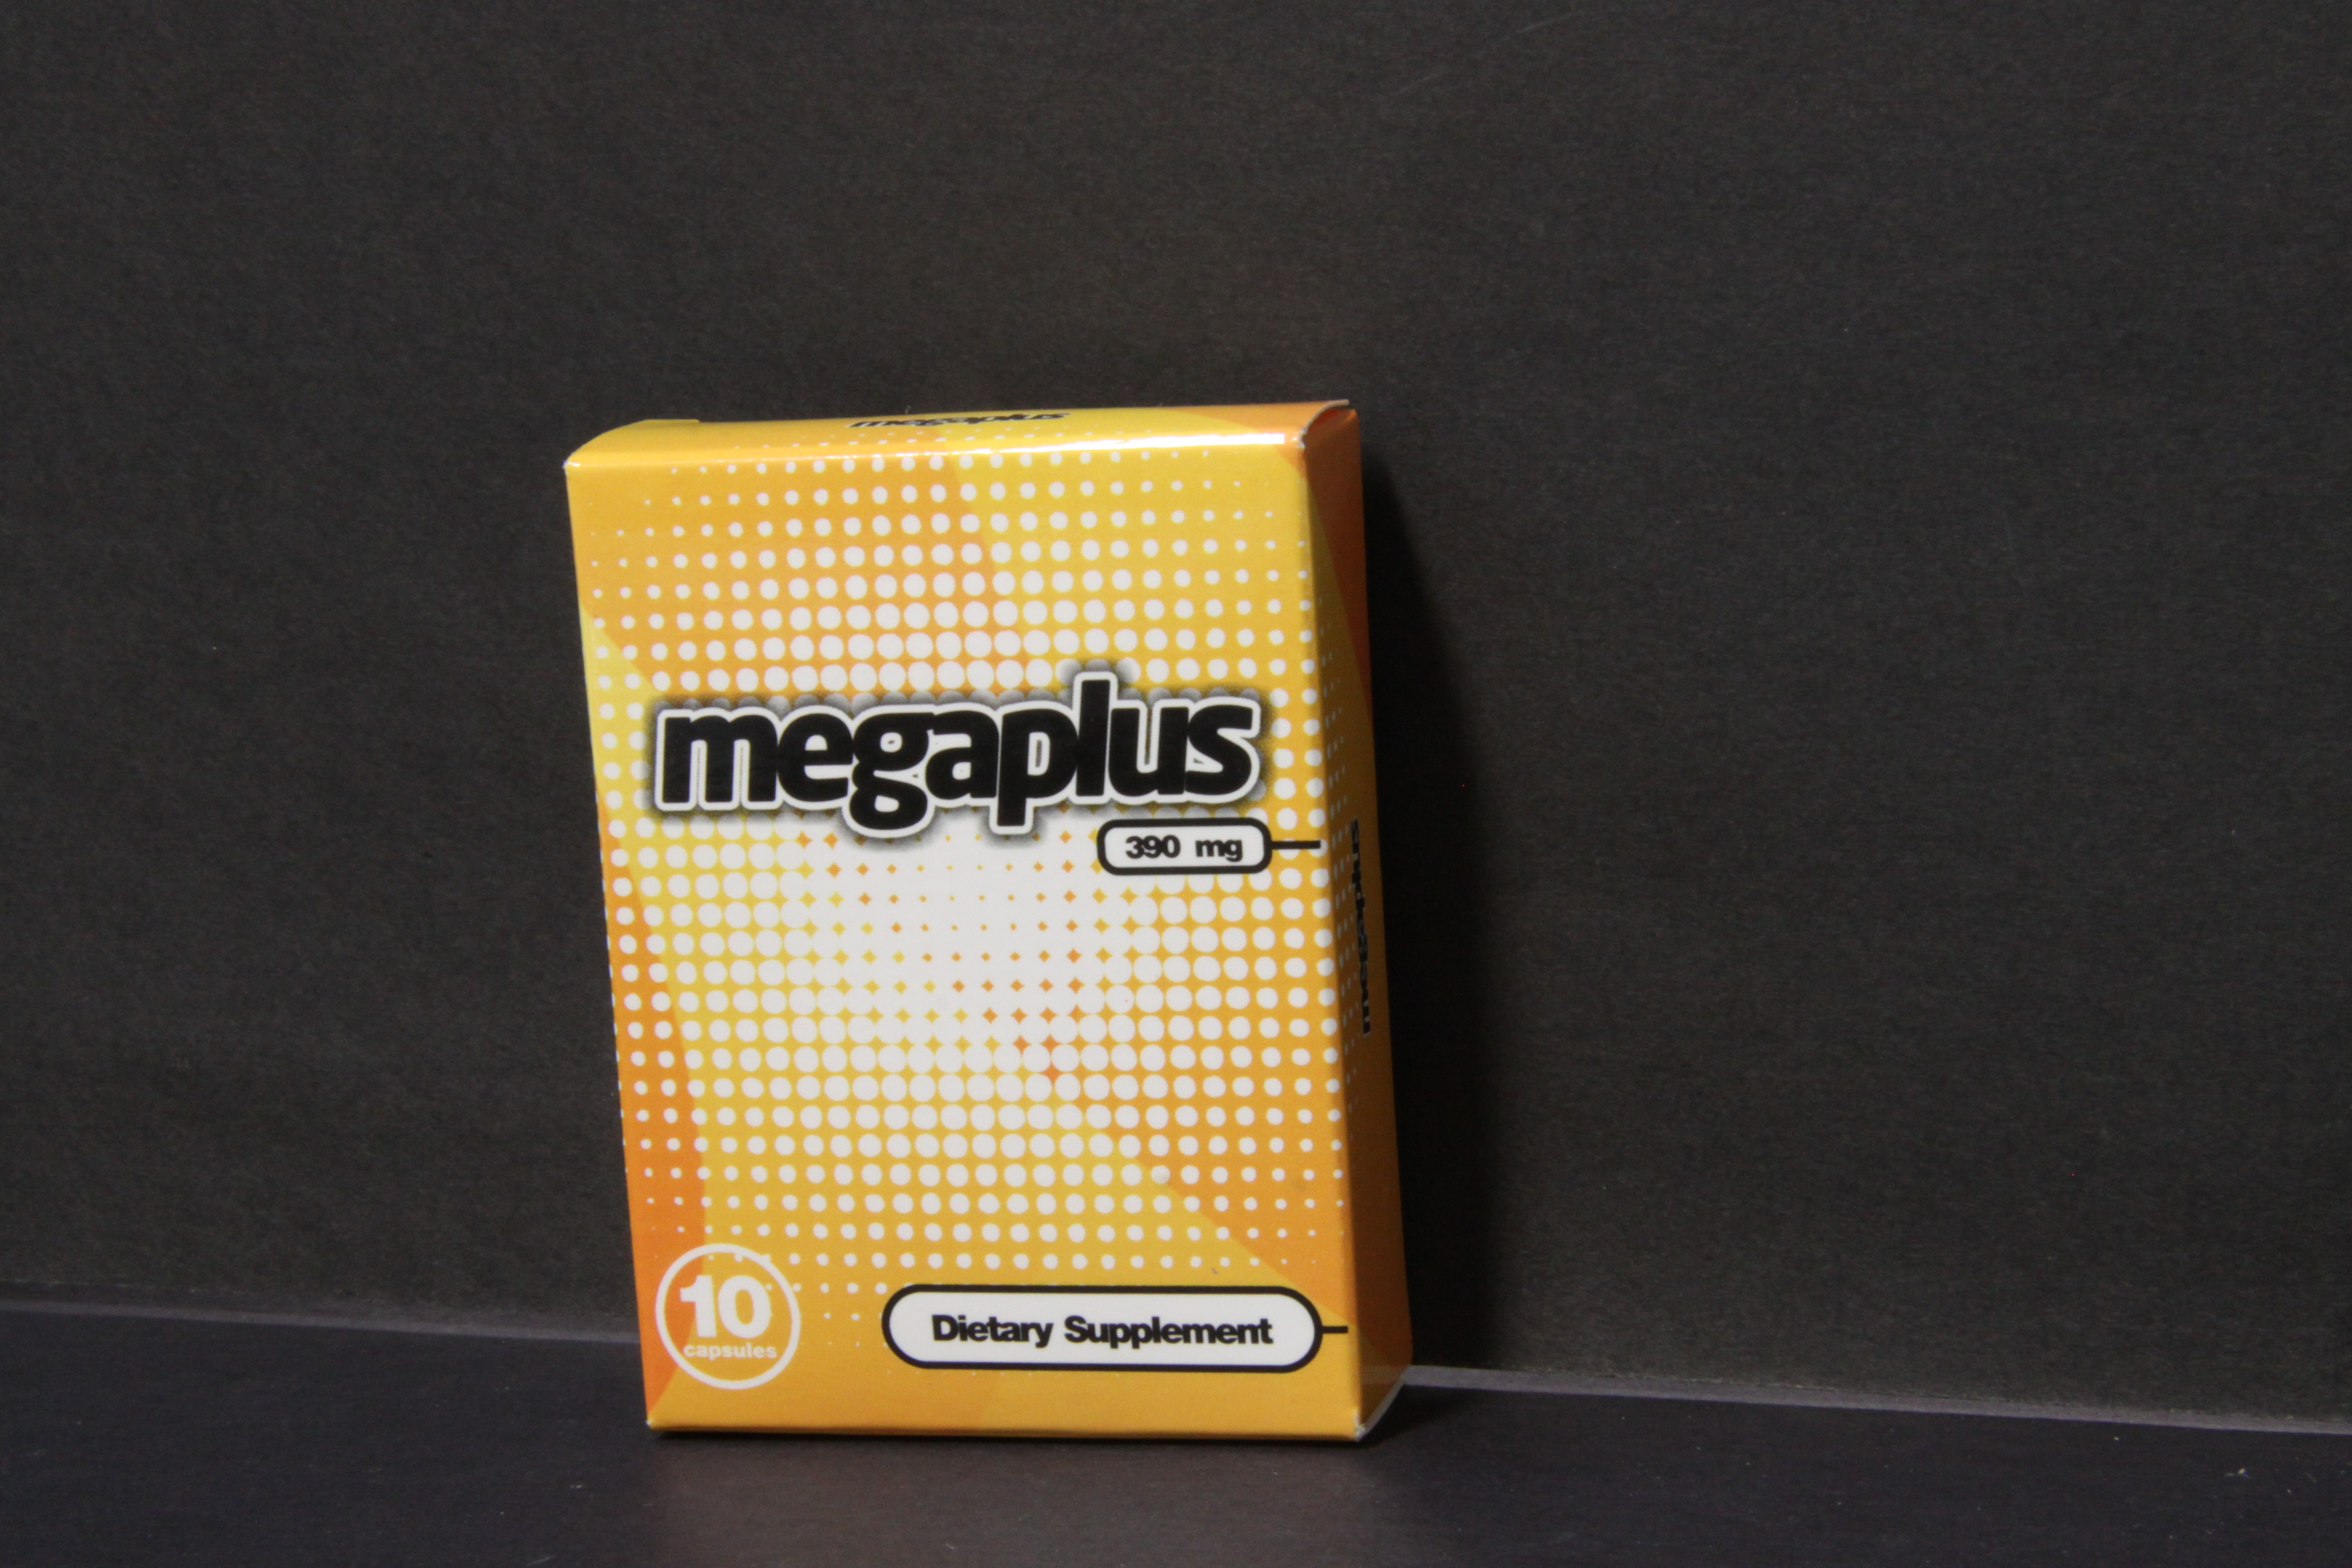 Image of the illigal product: Megaplus